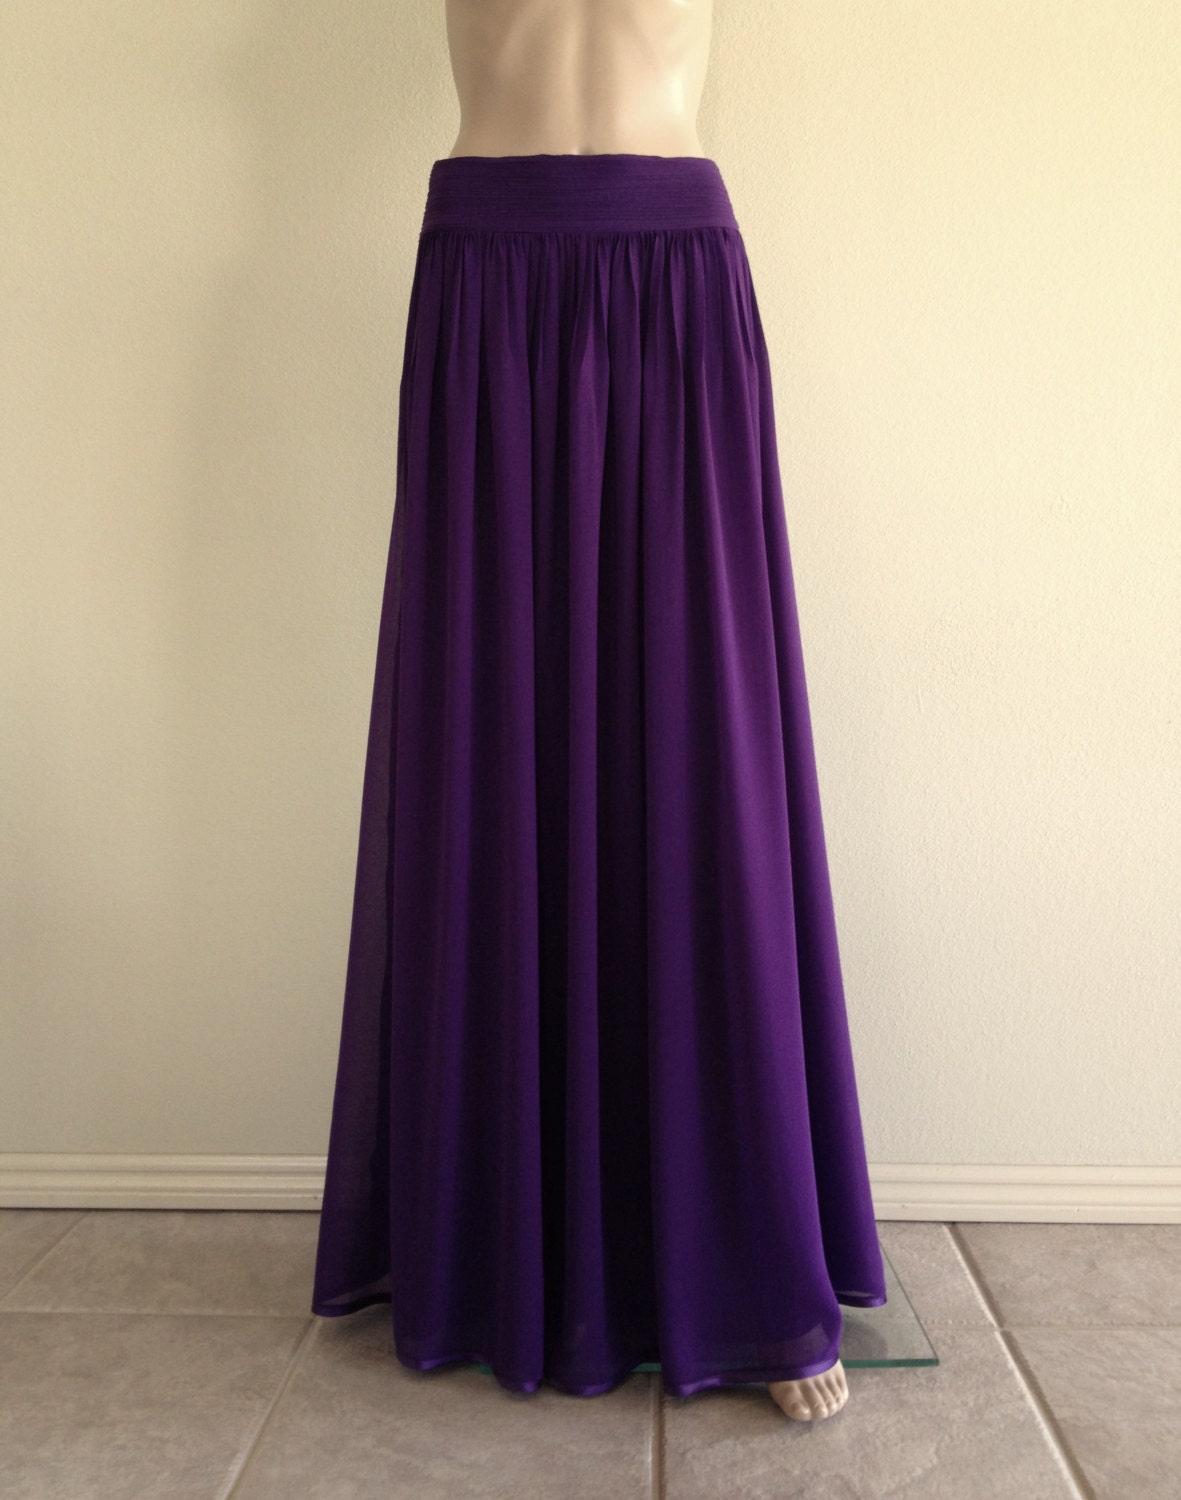 Bridesmaid Skirt. Maxi Skirt. Dark Purple Skirt | Etsy